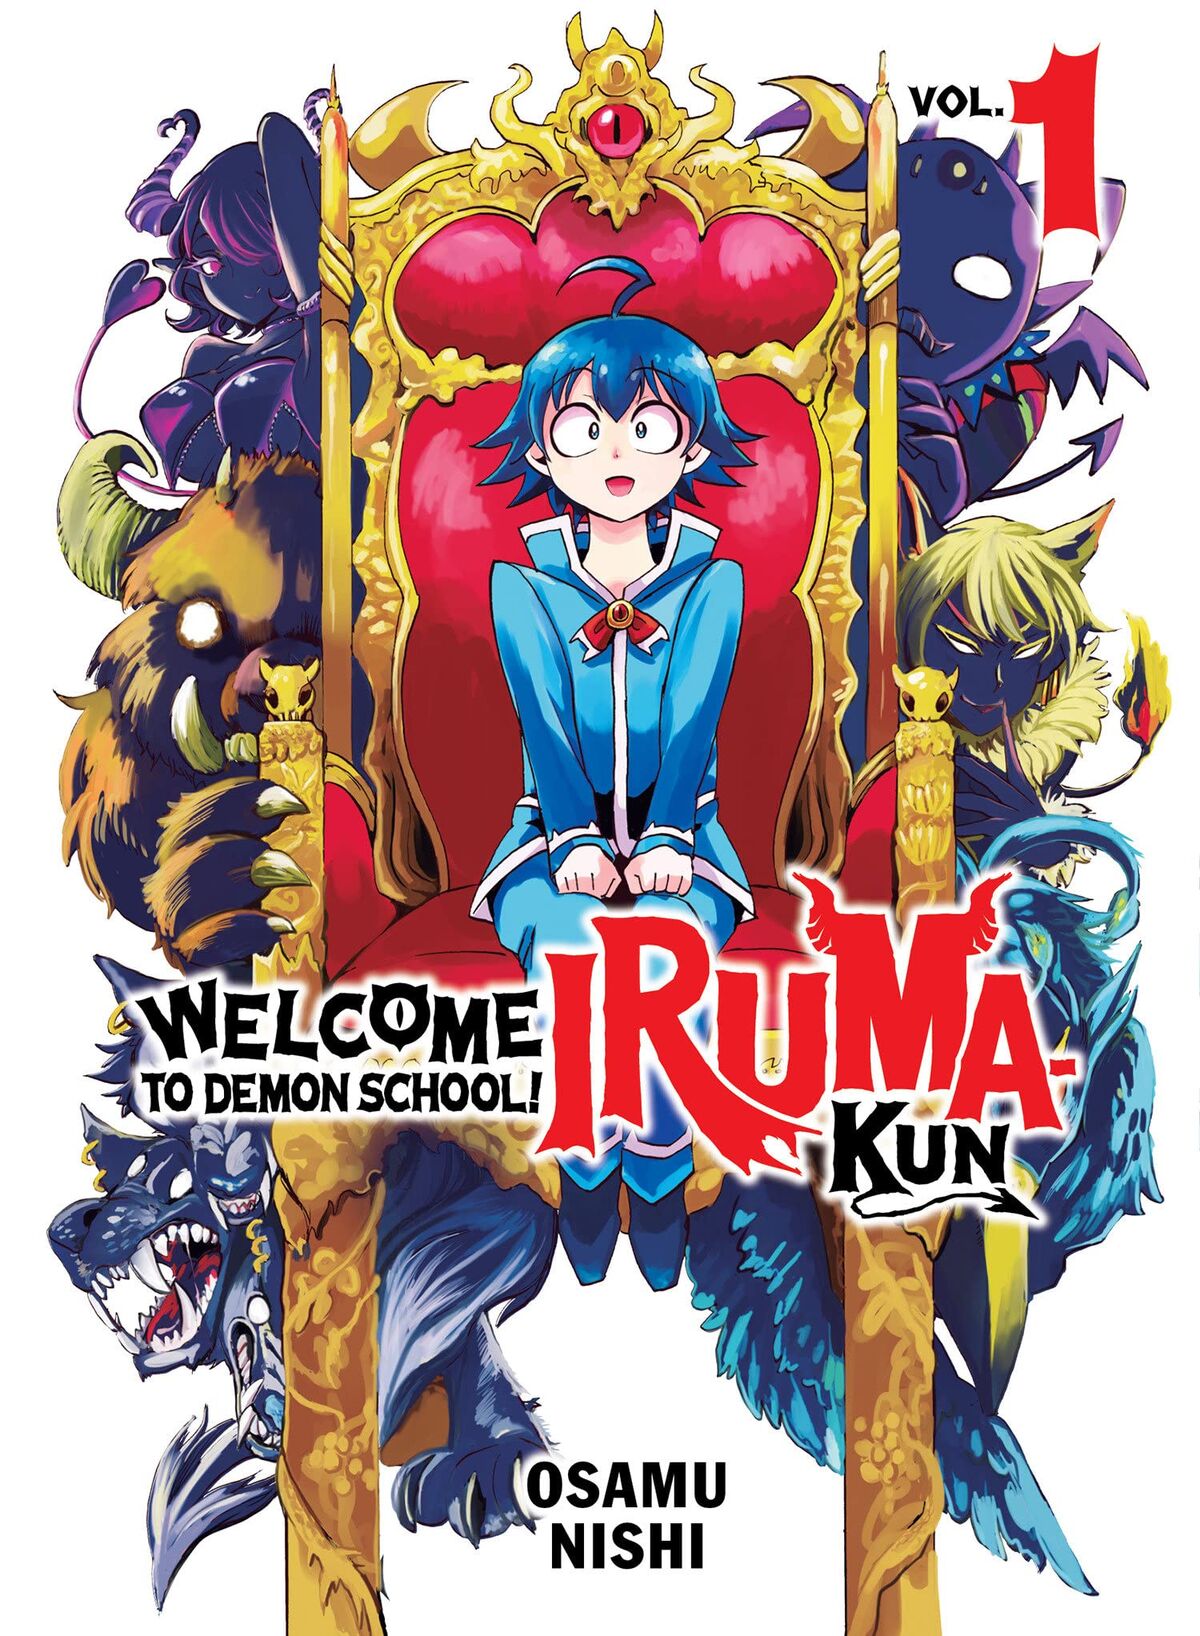 Welcome To Demon School Iruma-kun Season 4 Release Date Situation! 